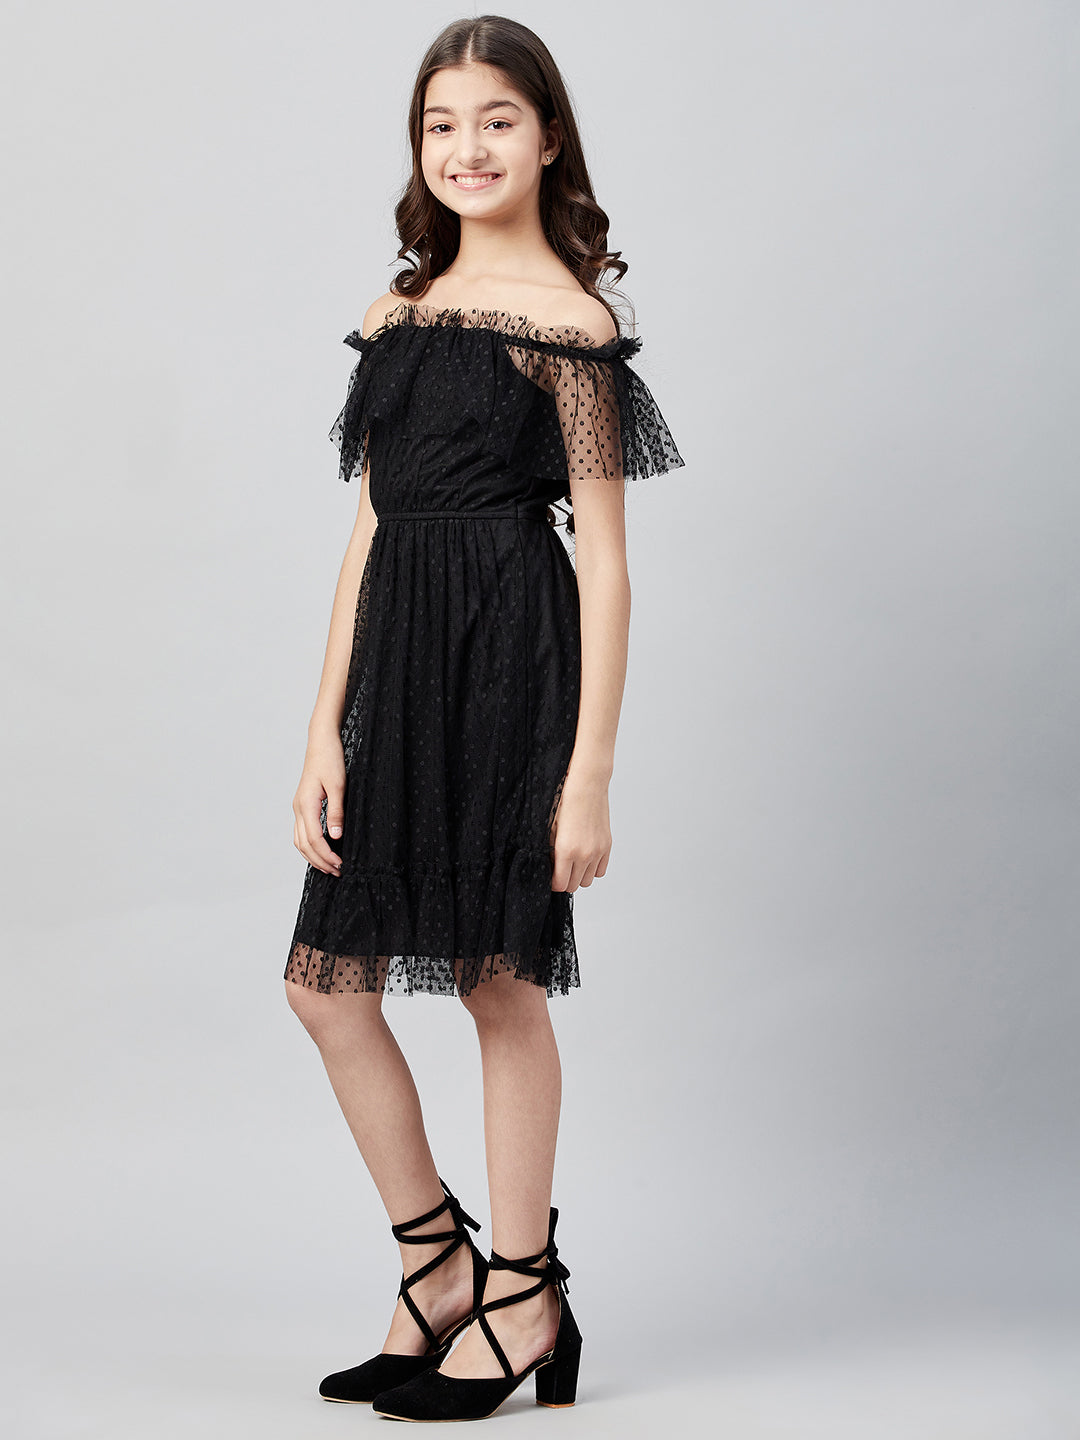 Athena Girl Black Off-Shoulder Dress - Athena Lifestyle